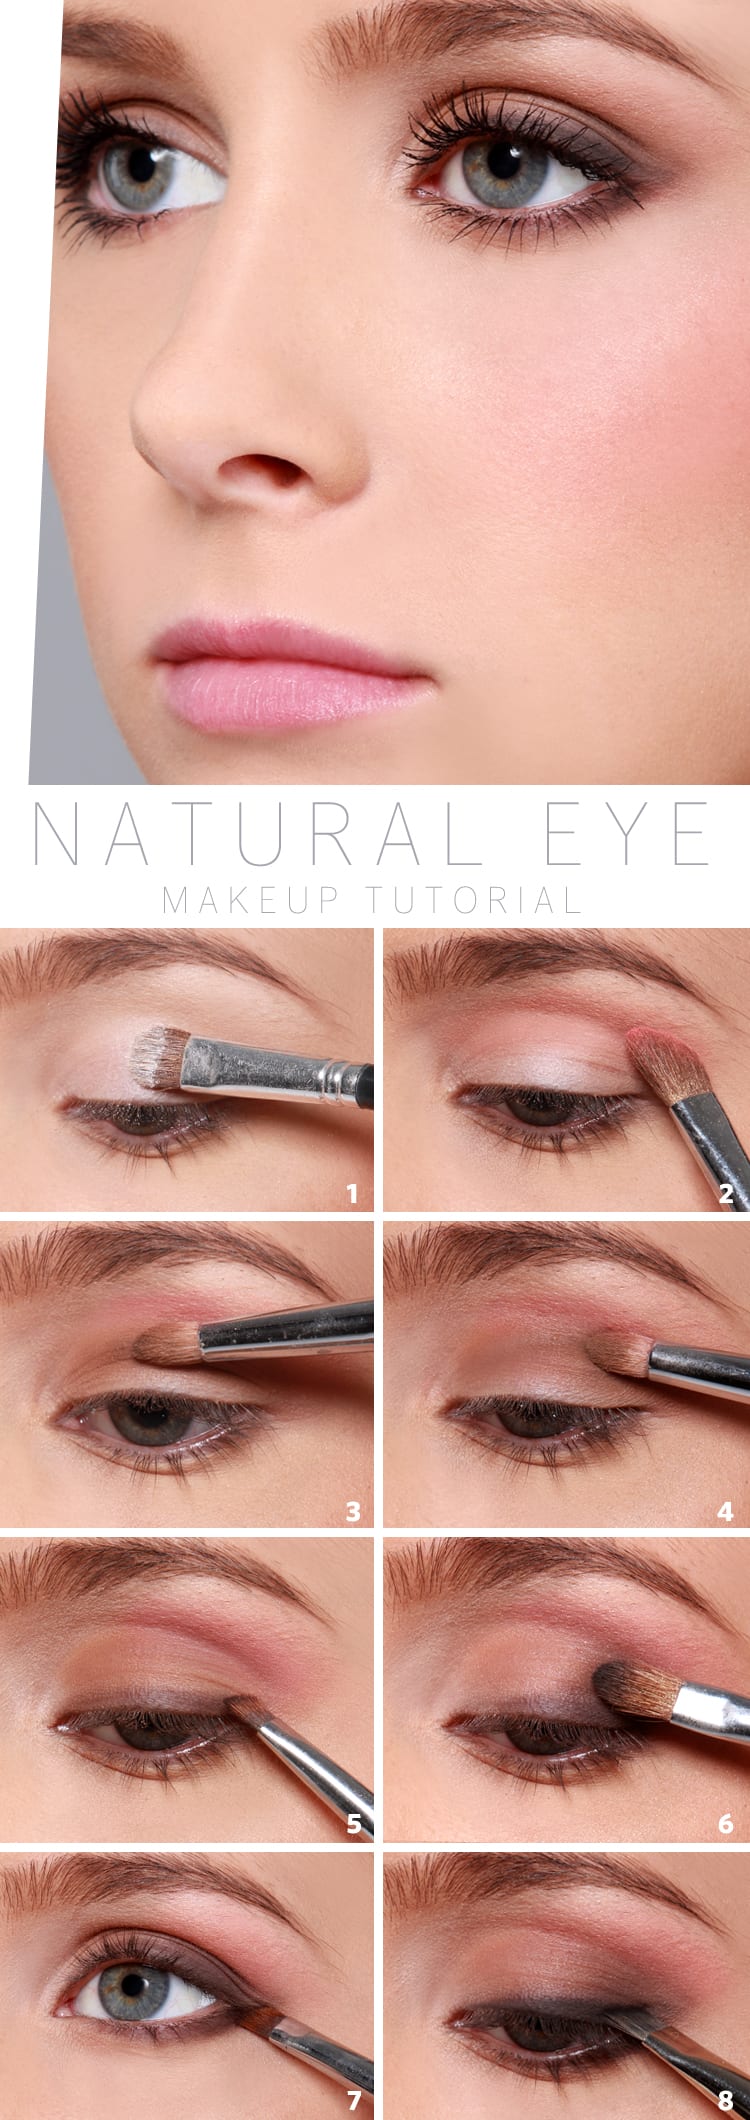 Lulus How-To: Natural Eye Makeup Tutorial - Lulus.com Fashion Blog